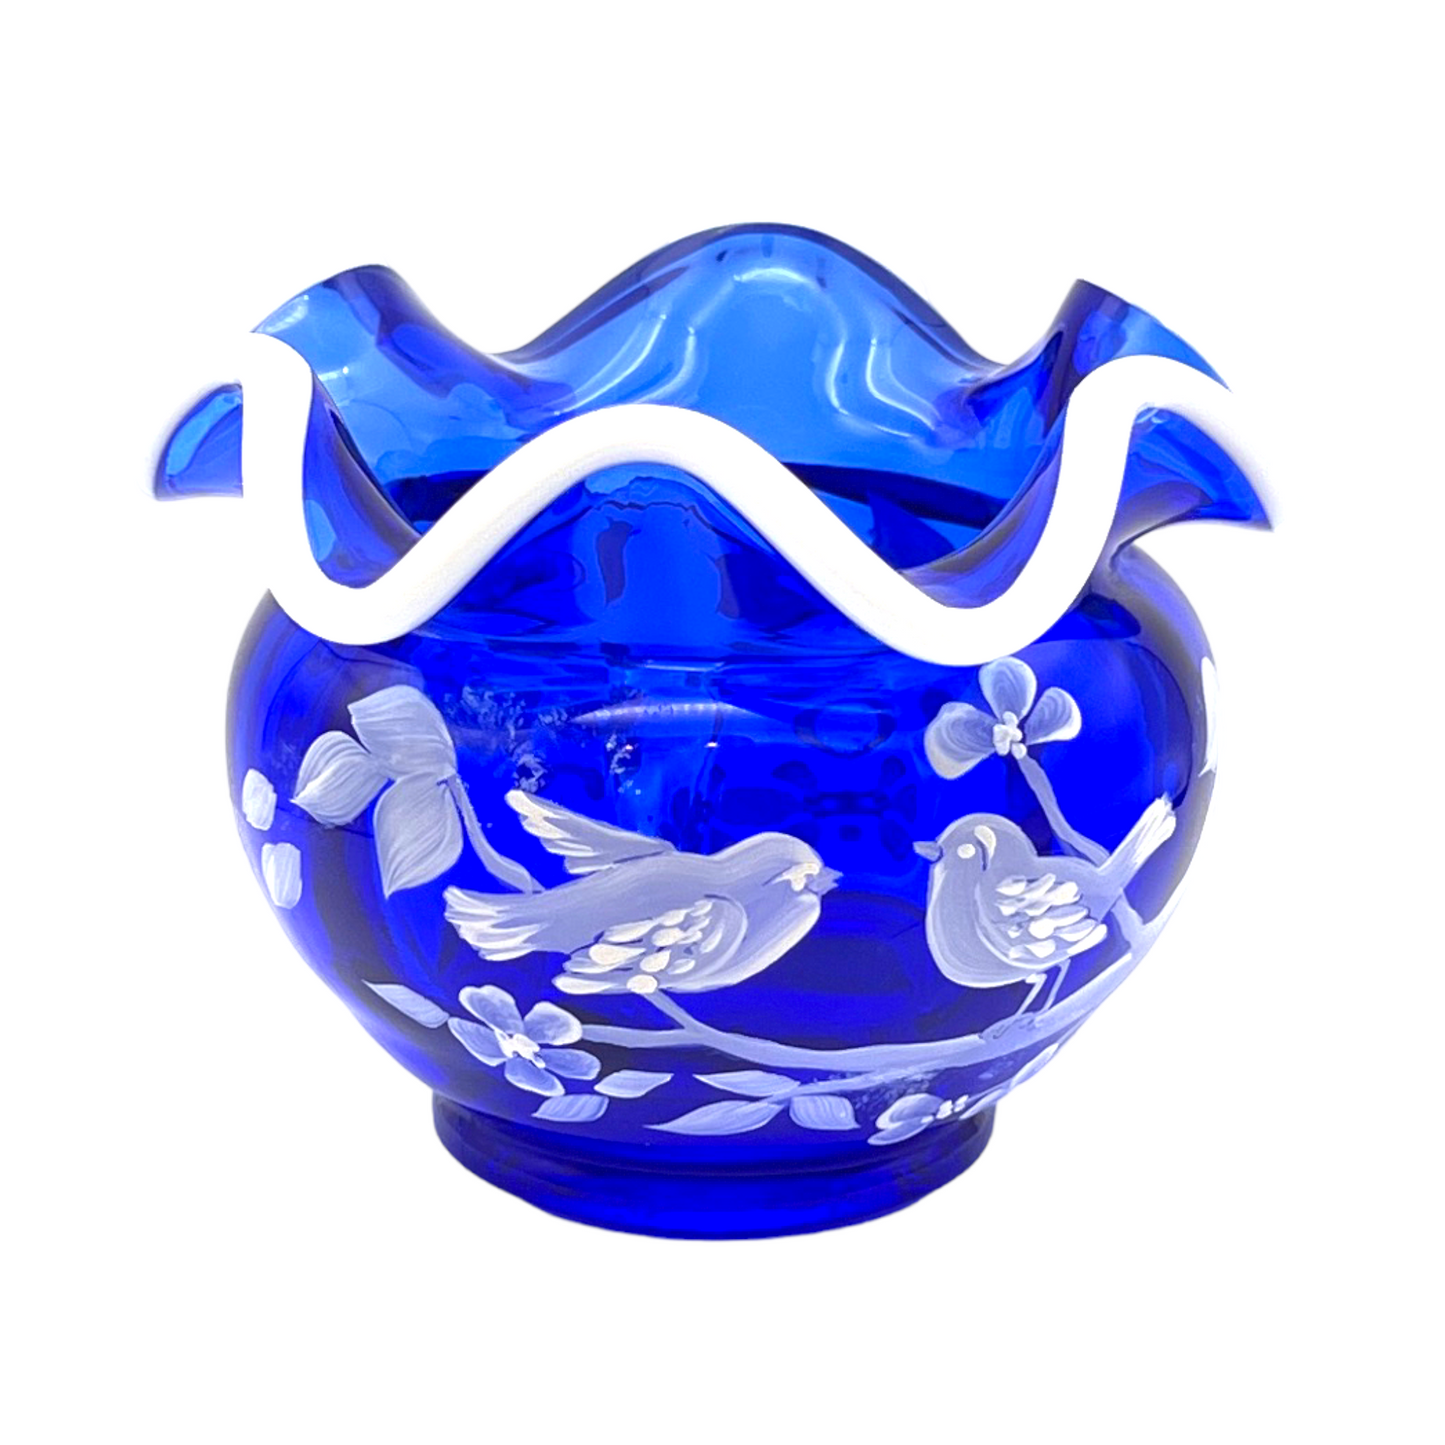 Fenton Art Glass - Nancy Fenton Signed - Cobalt Blue & White Candy Bowl - Hand Painted - 3.5"